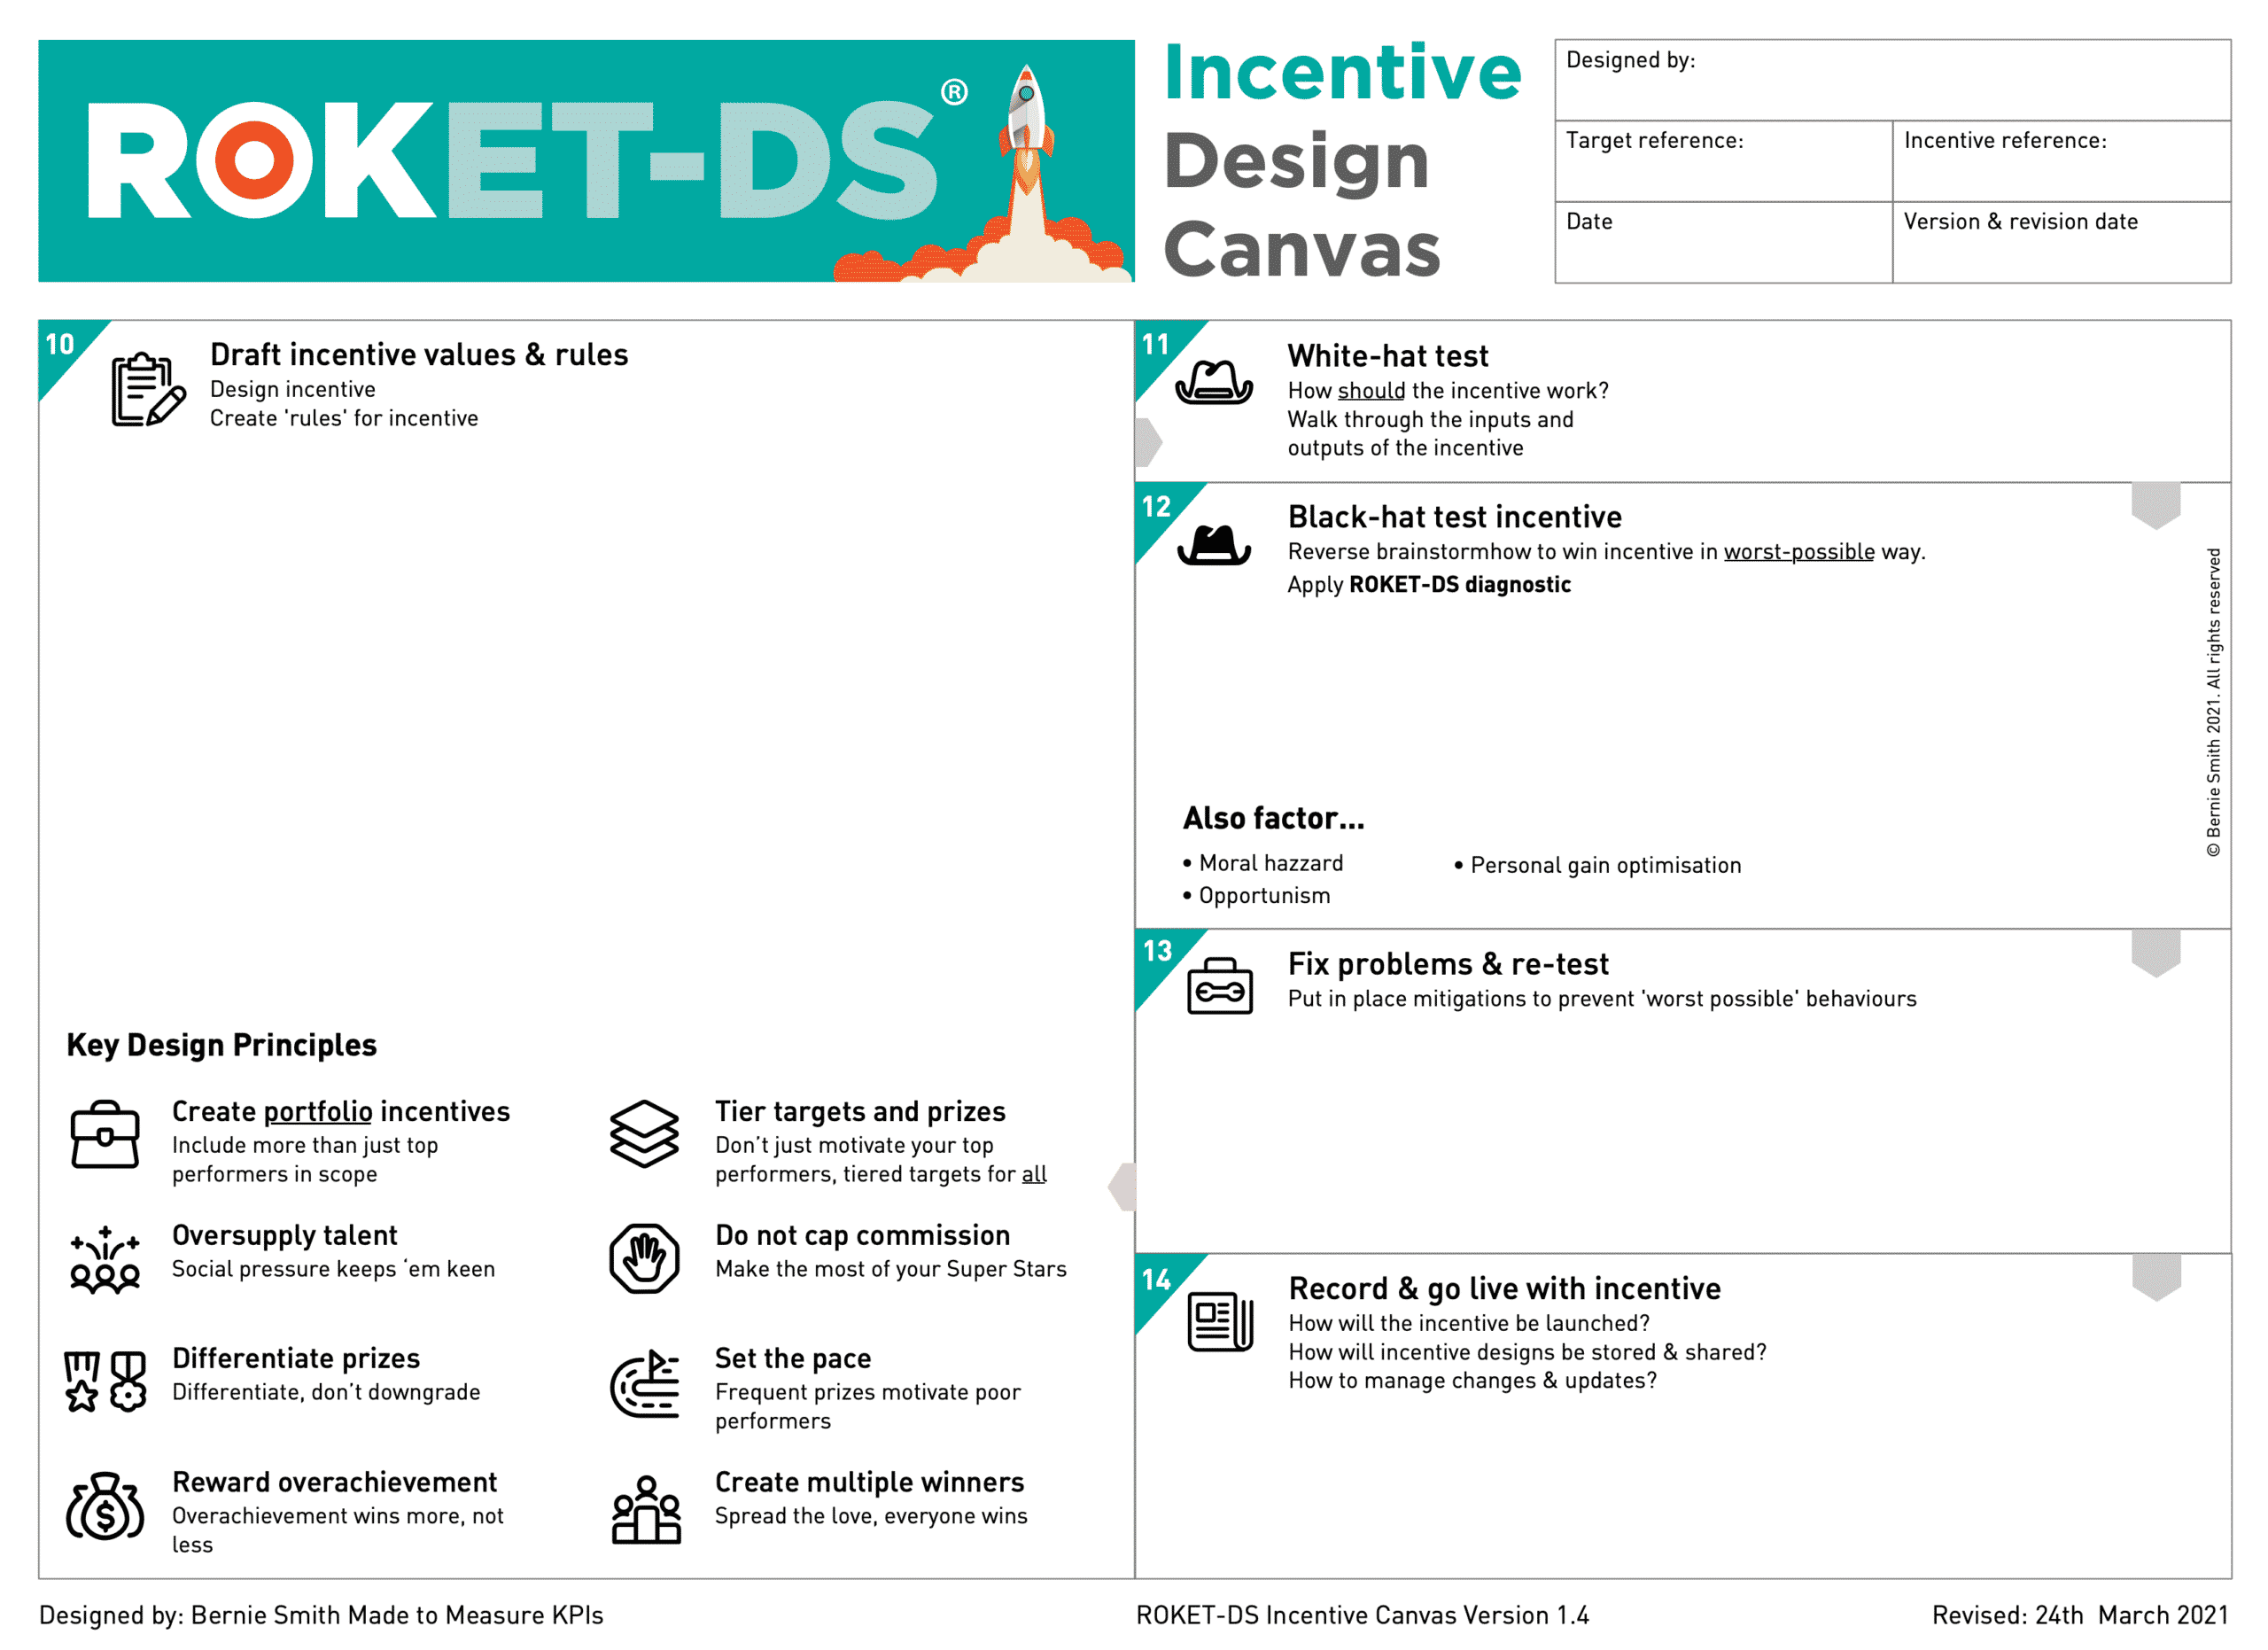 ROKET-DS Incentive Design Canvas- standard res image